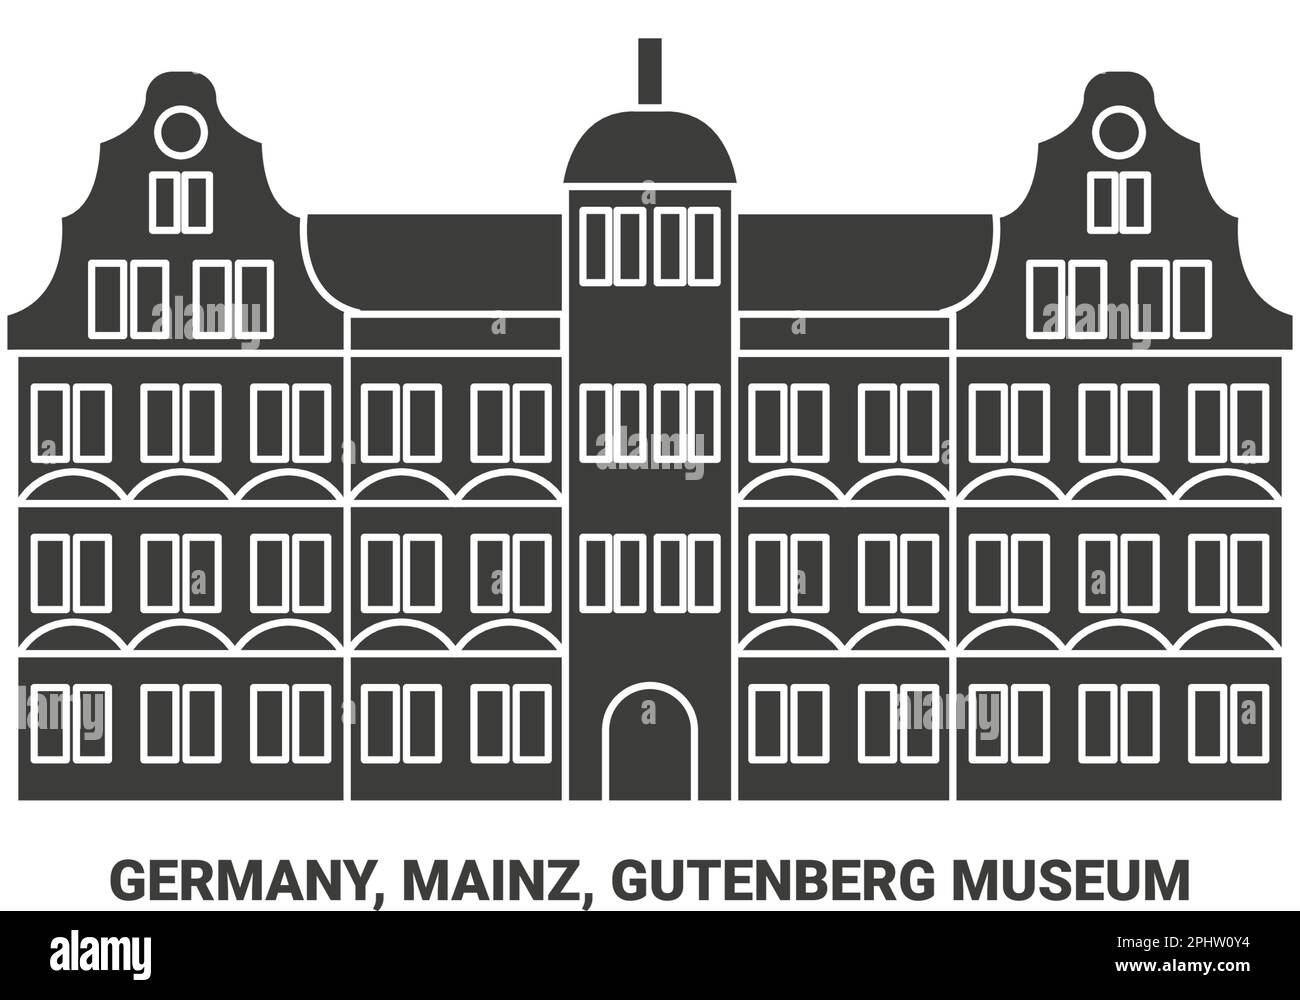 Germany, Mainz, Gutenberg Museum travel landmark vector illustration Stock Vector